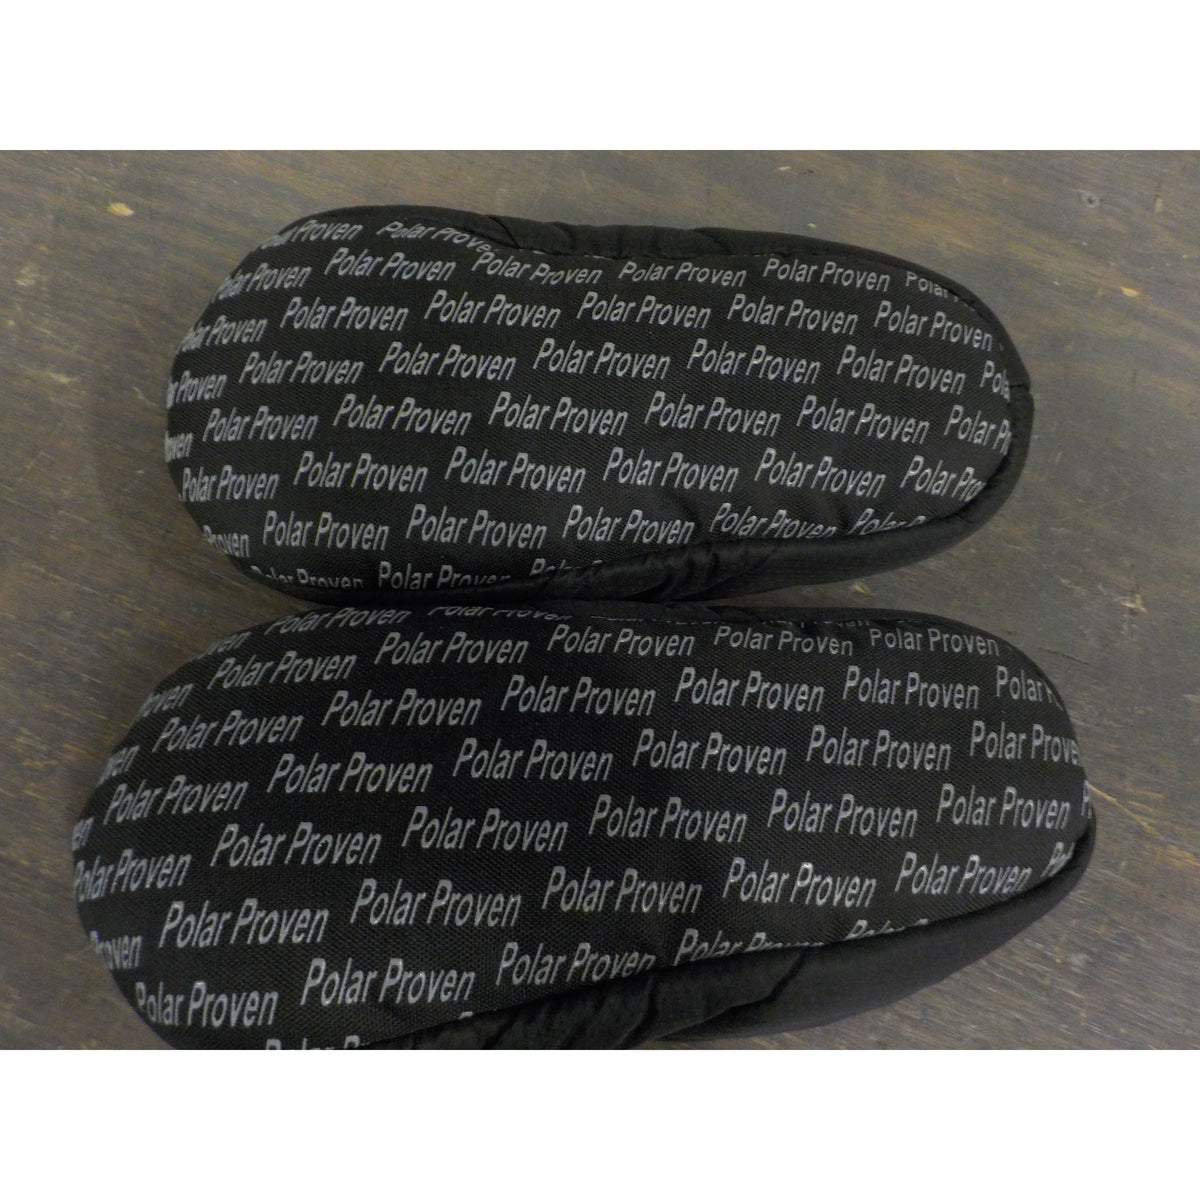 Baffin Cush Hybrid Slipper - Black - Medium - Used - Acceptable